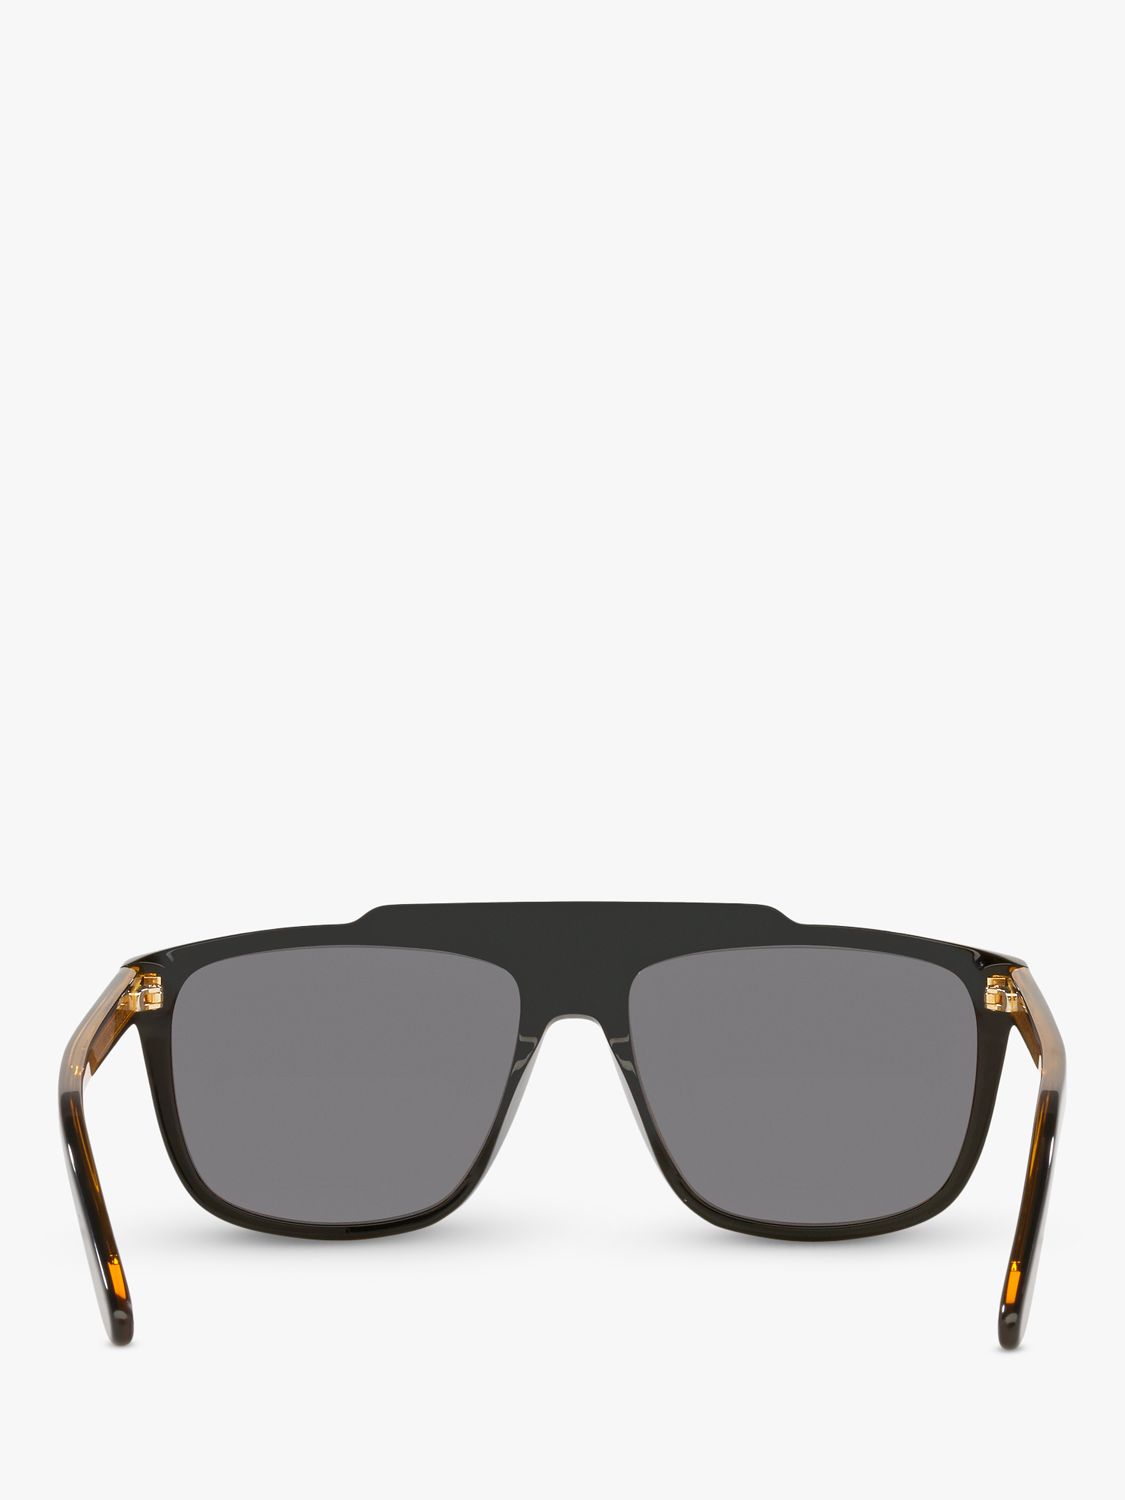 Gucci Gg1039s Men S Aviator Sunglasses Black Grey At John Lewis And Partners